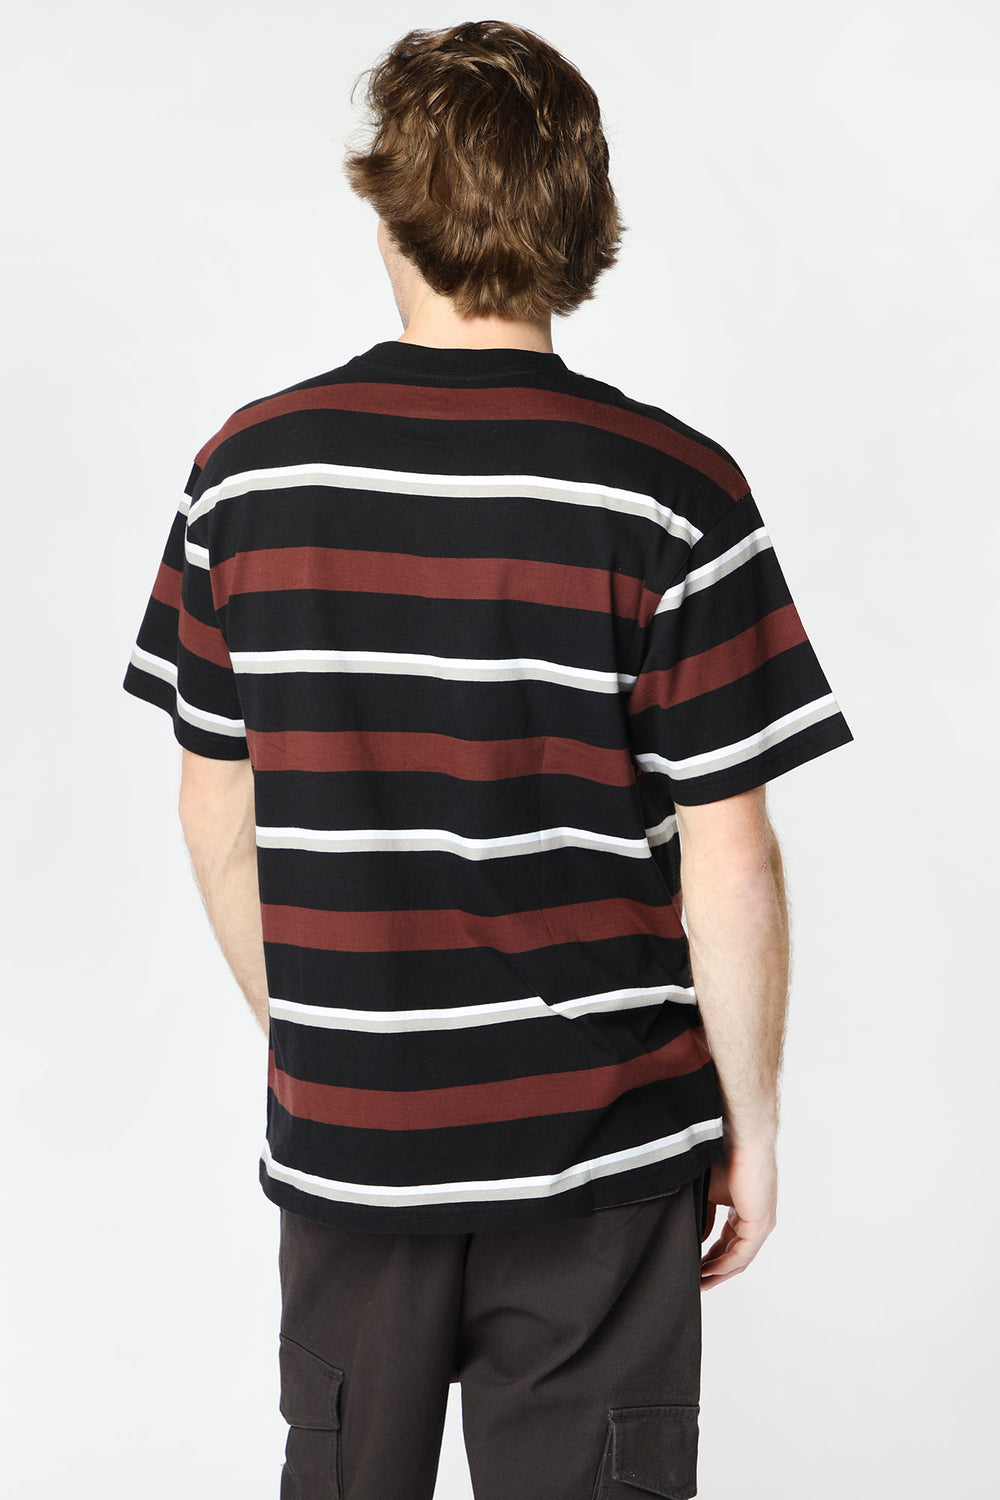 Amnesia Offline Mens Striped T-Shirt Fuchsia